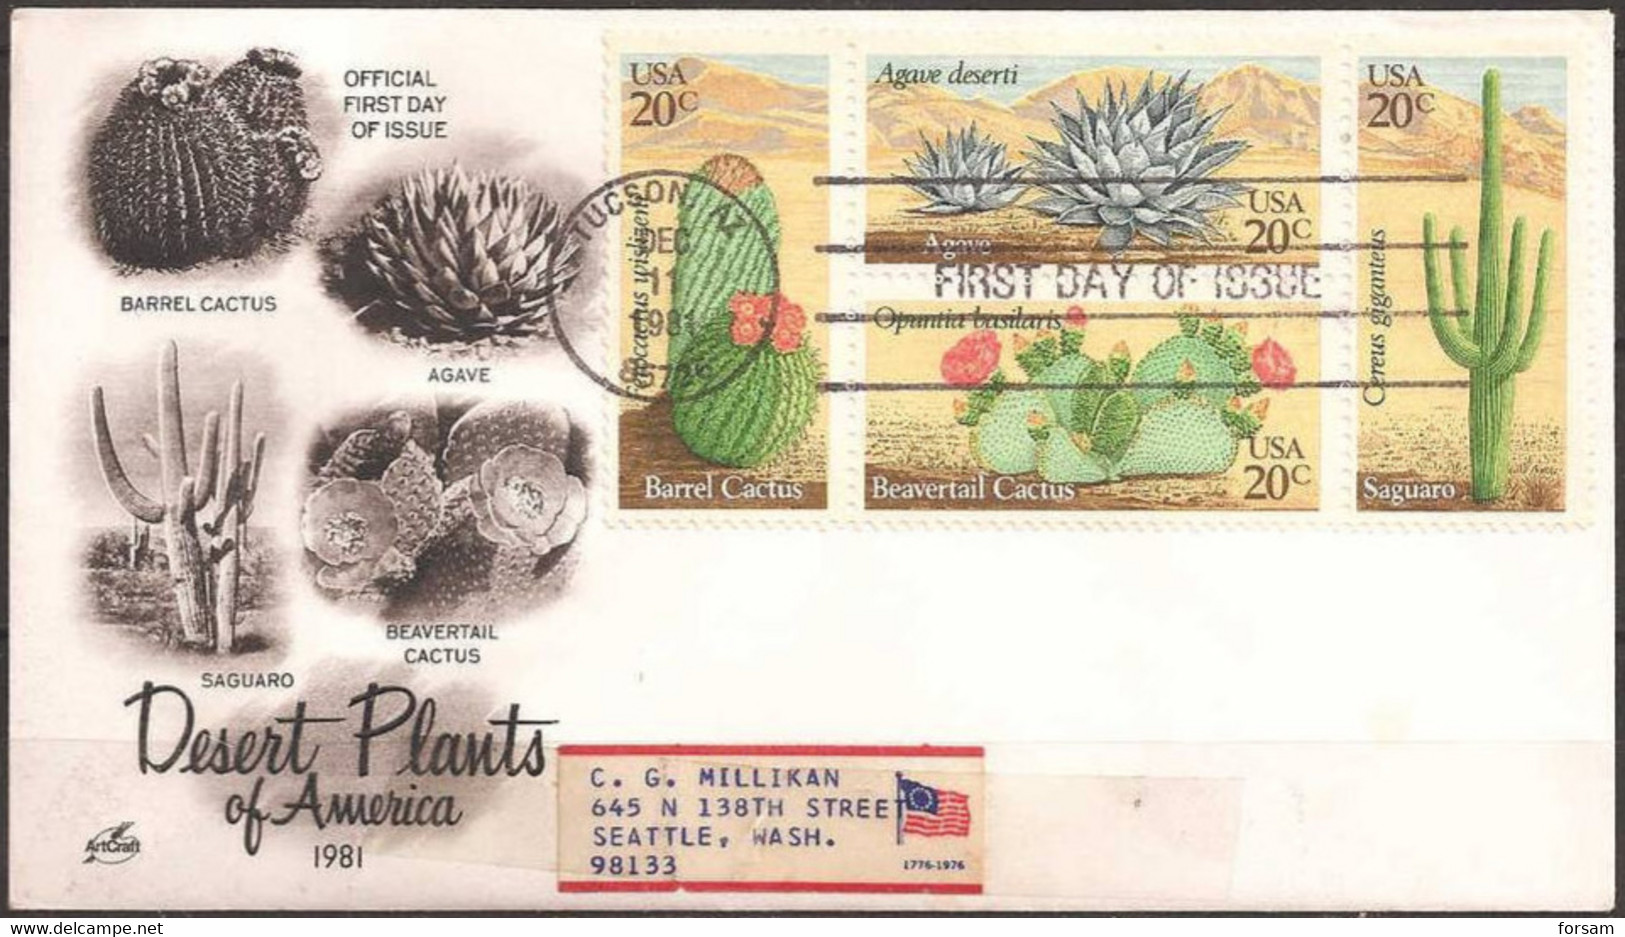 USA..1981..DECERT PLANTS Of  AMERICA ...FDC. - Cactus